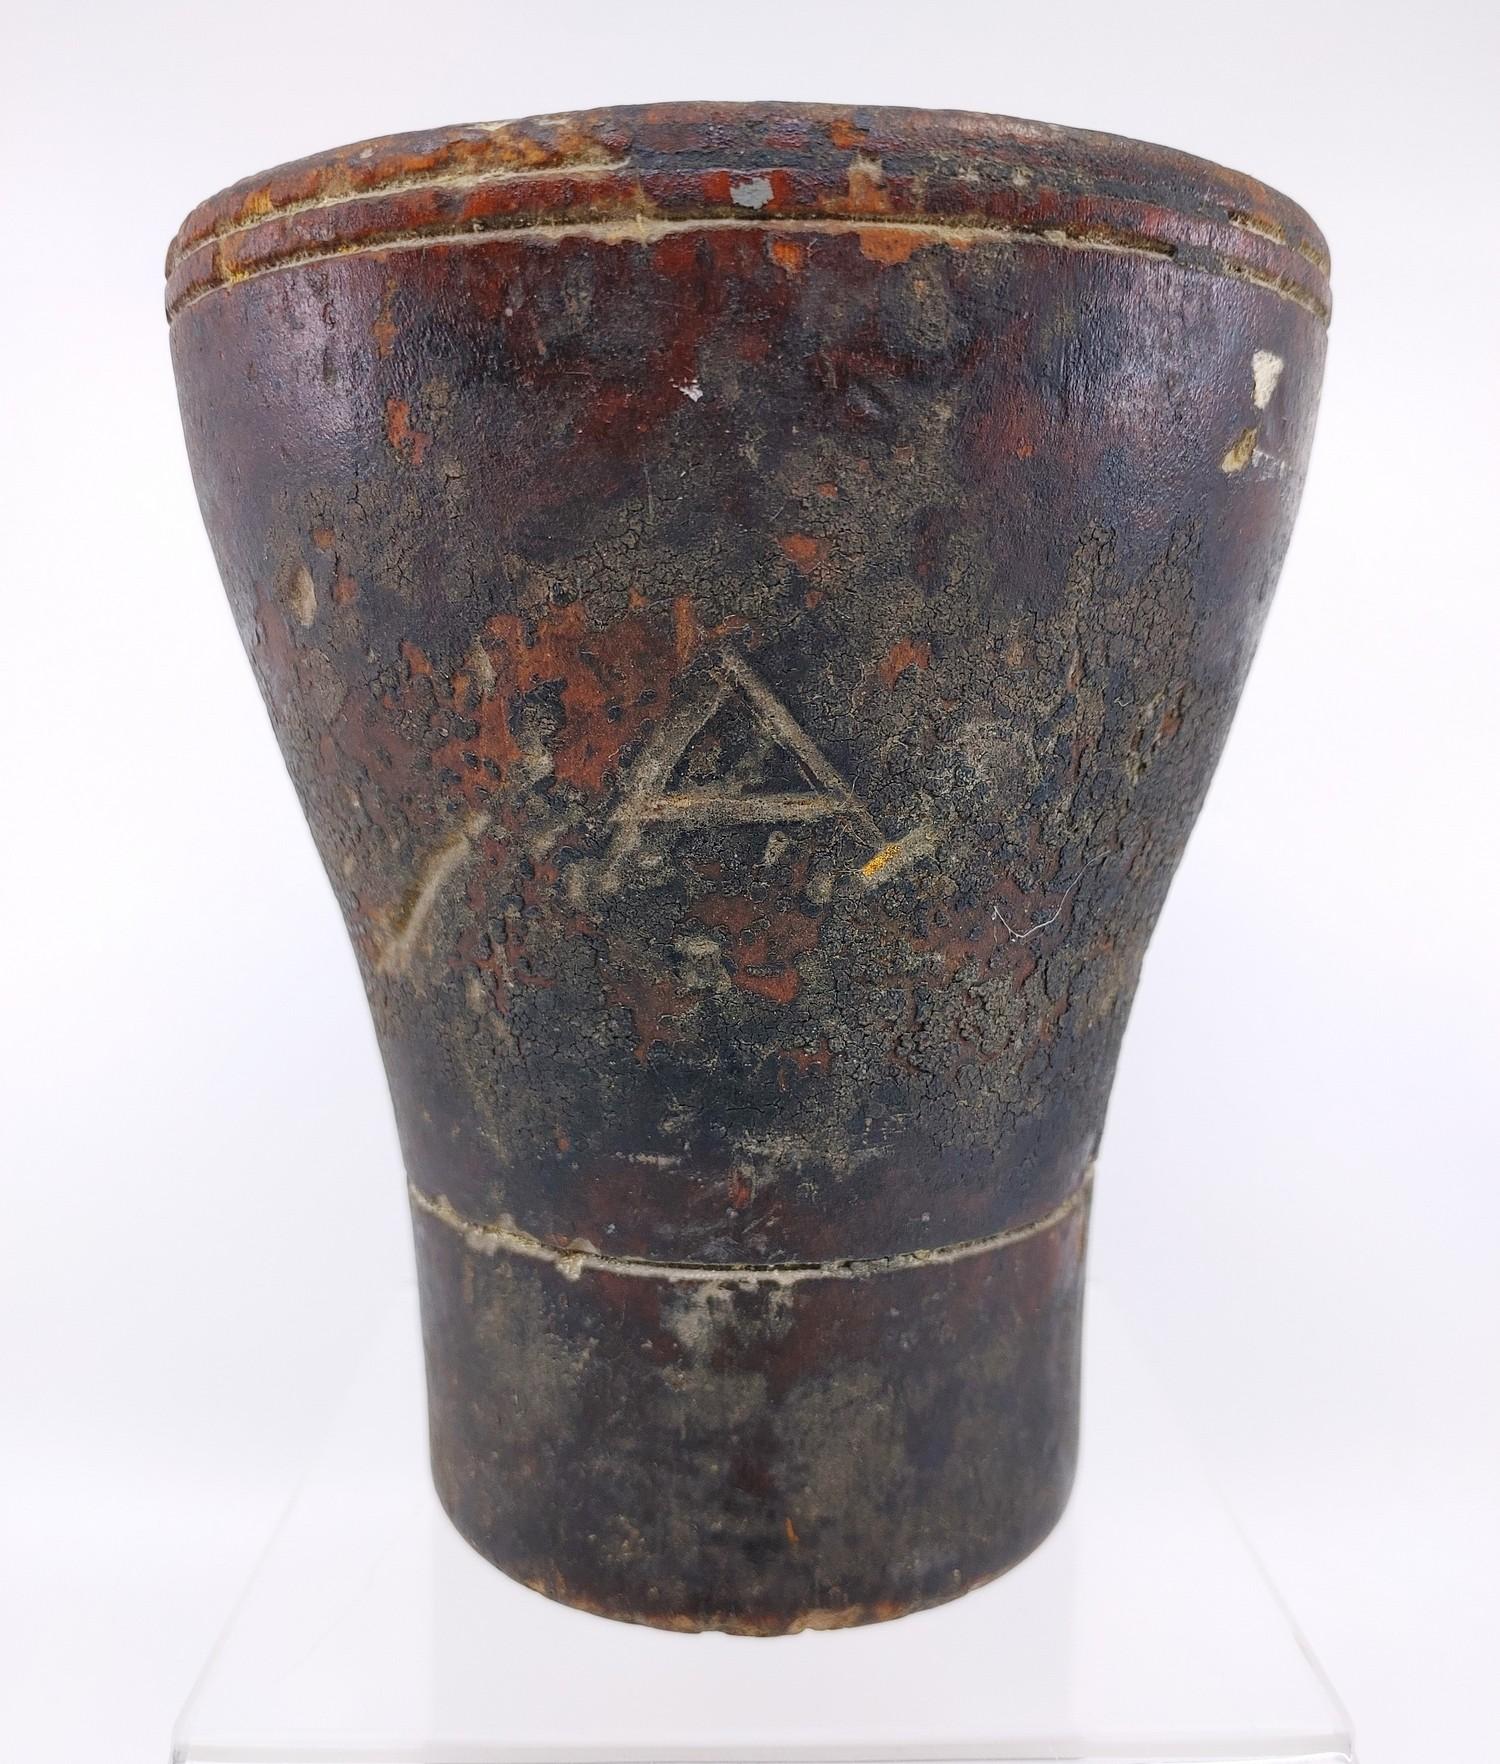 Pre-Columbian Kero Cup